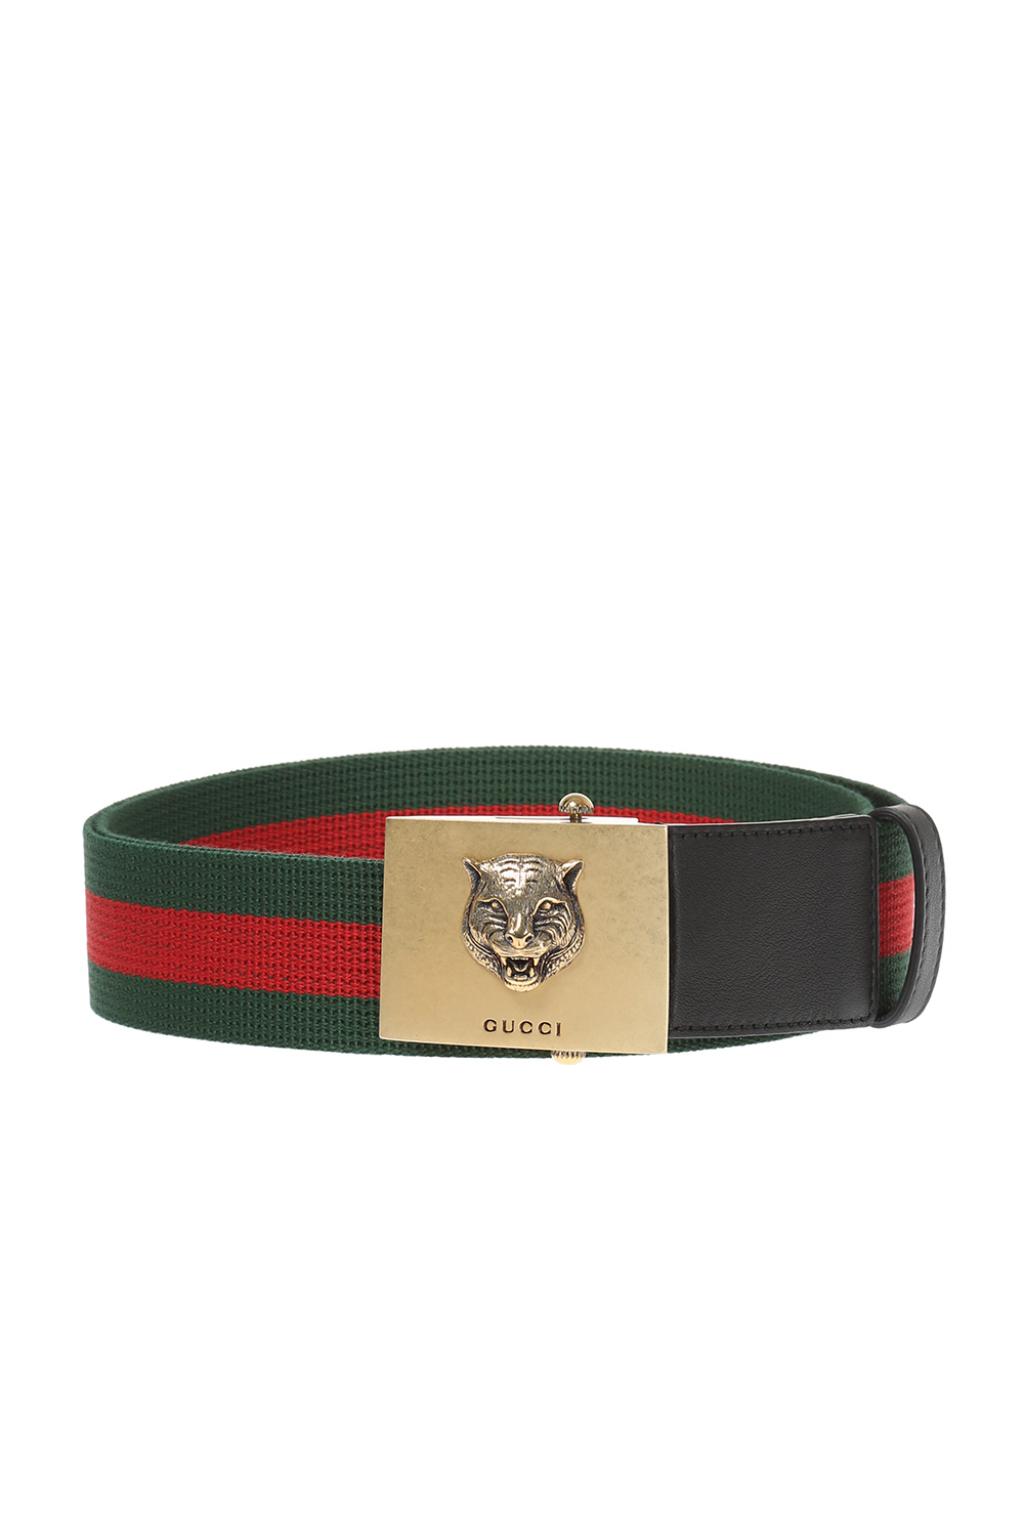 gucci tiger head belt